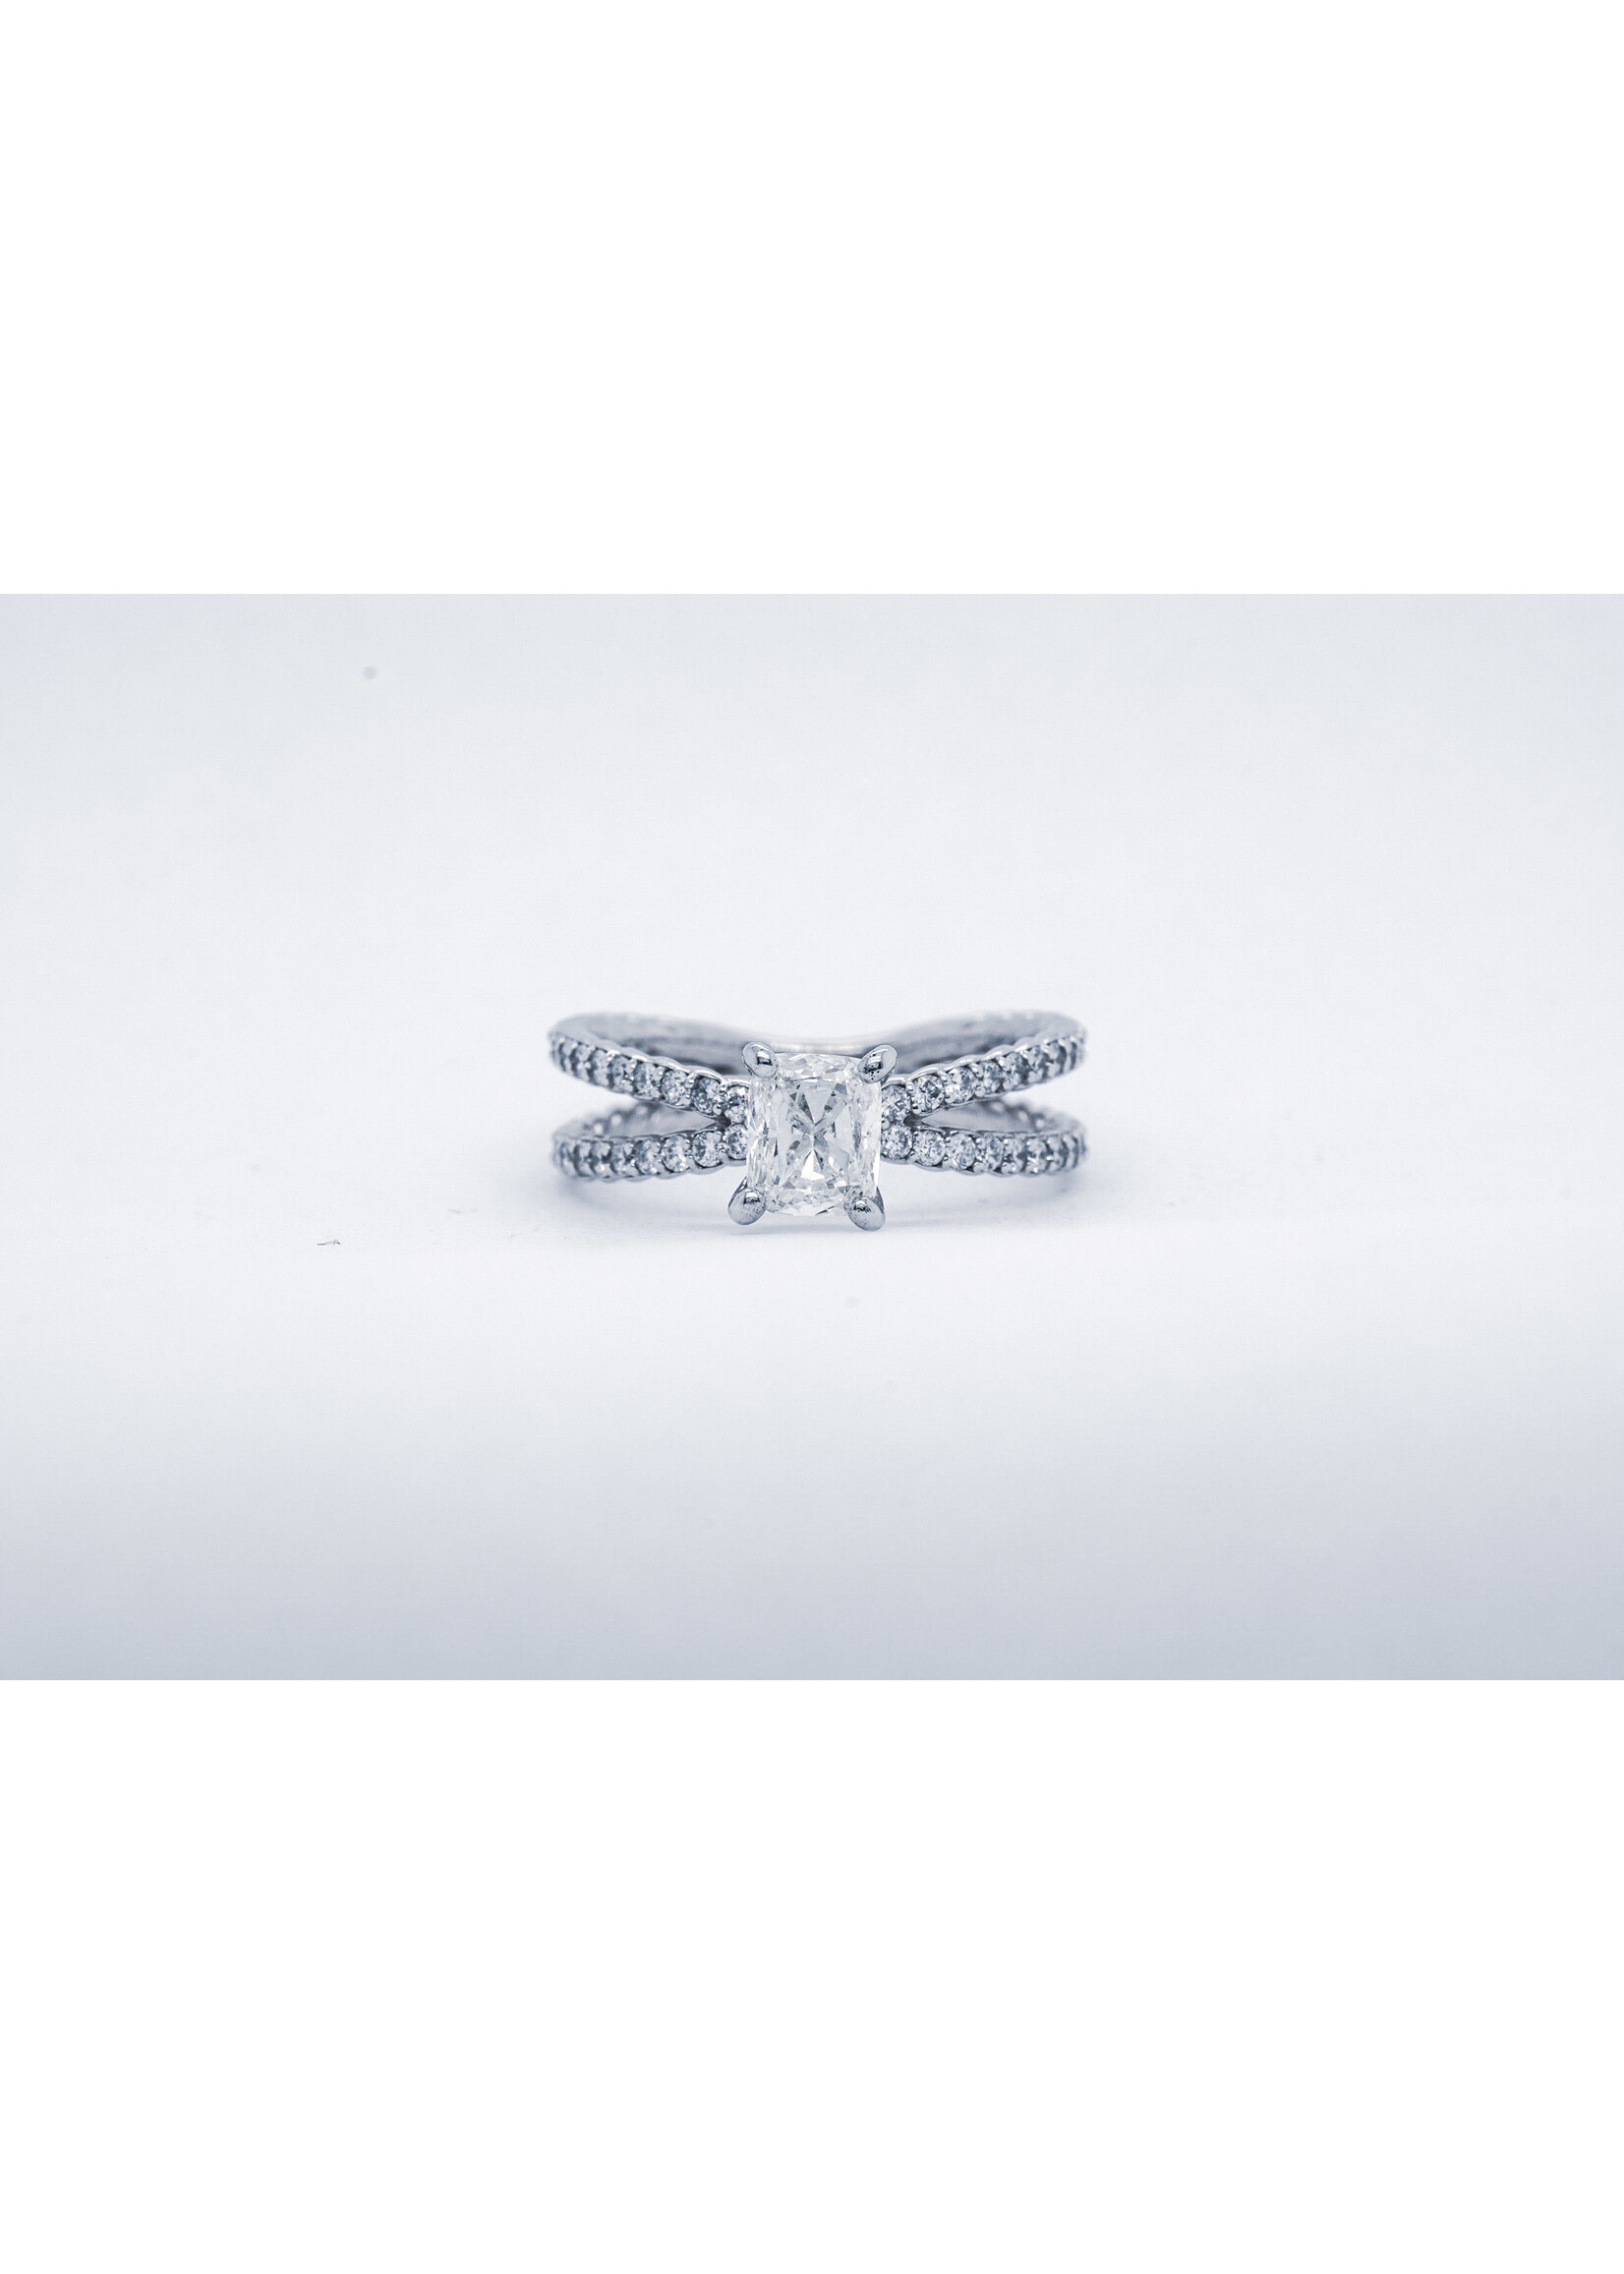 14KW 3.46g 1.37ctw (.97ctr) H/VVS2 GIA Cushion Diamond Engagement Ring (size 7)